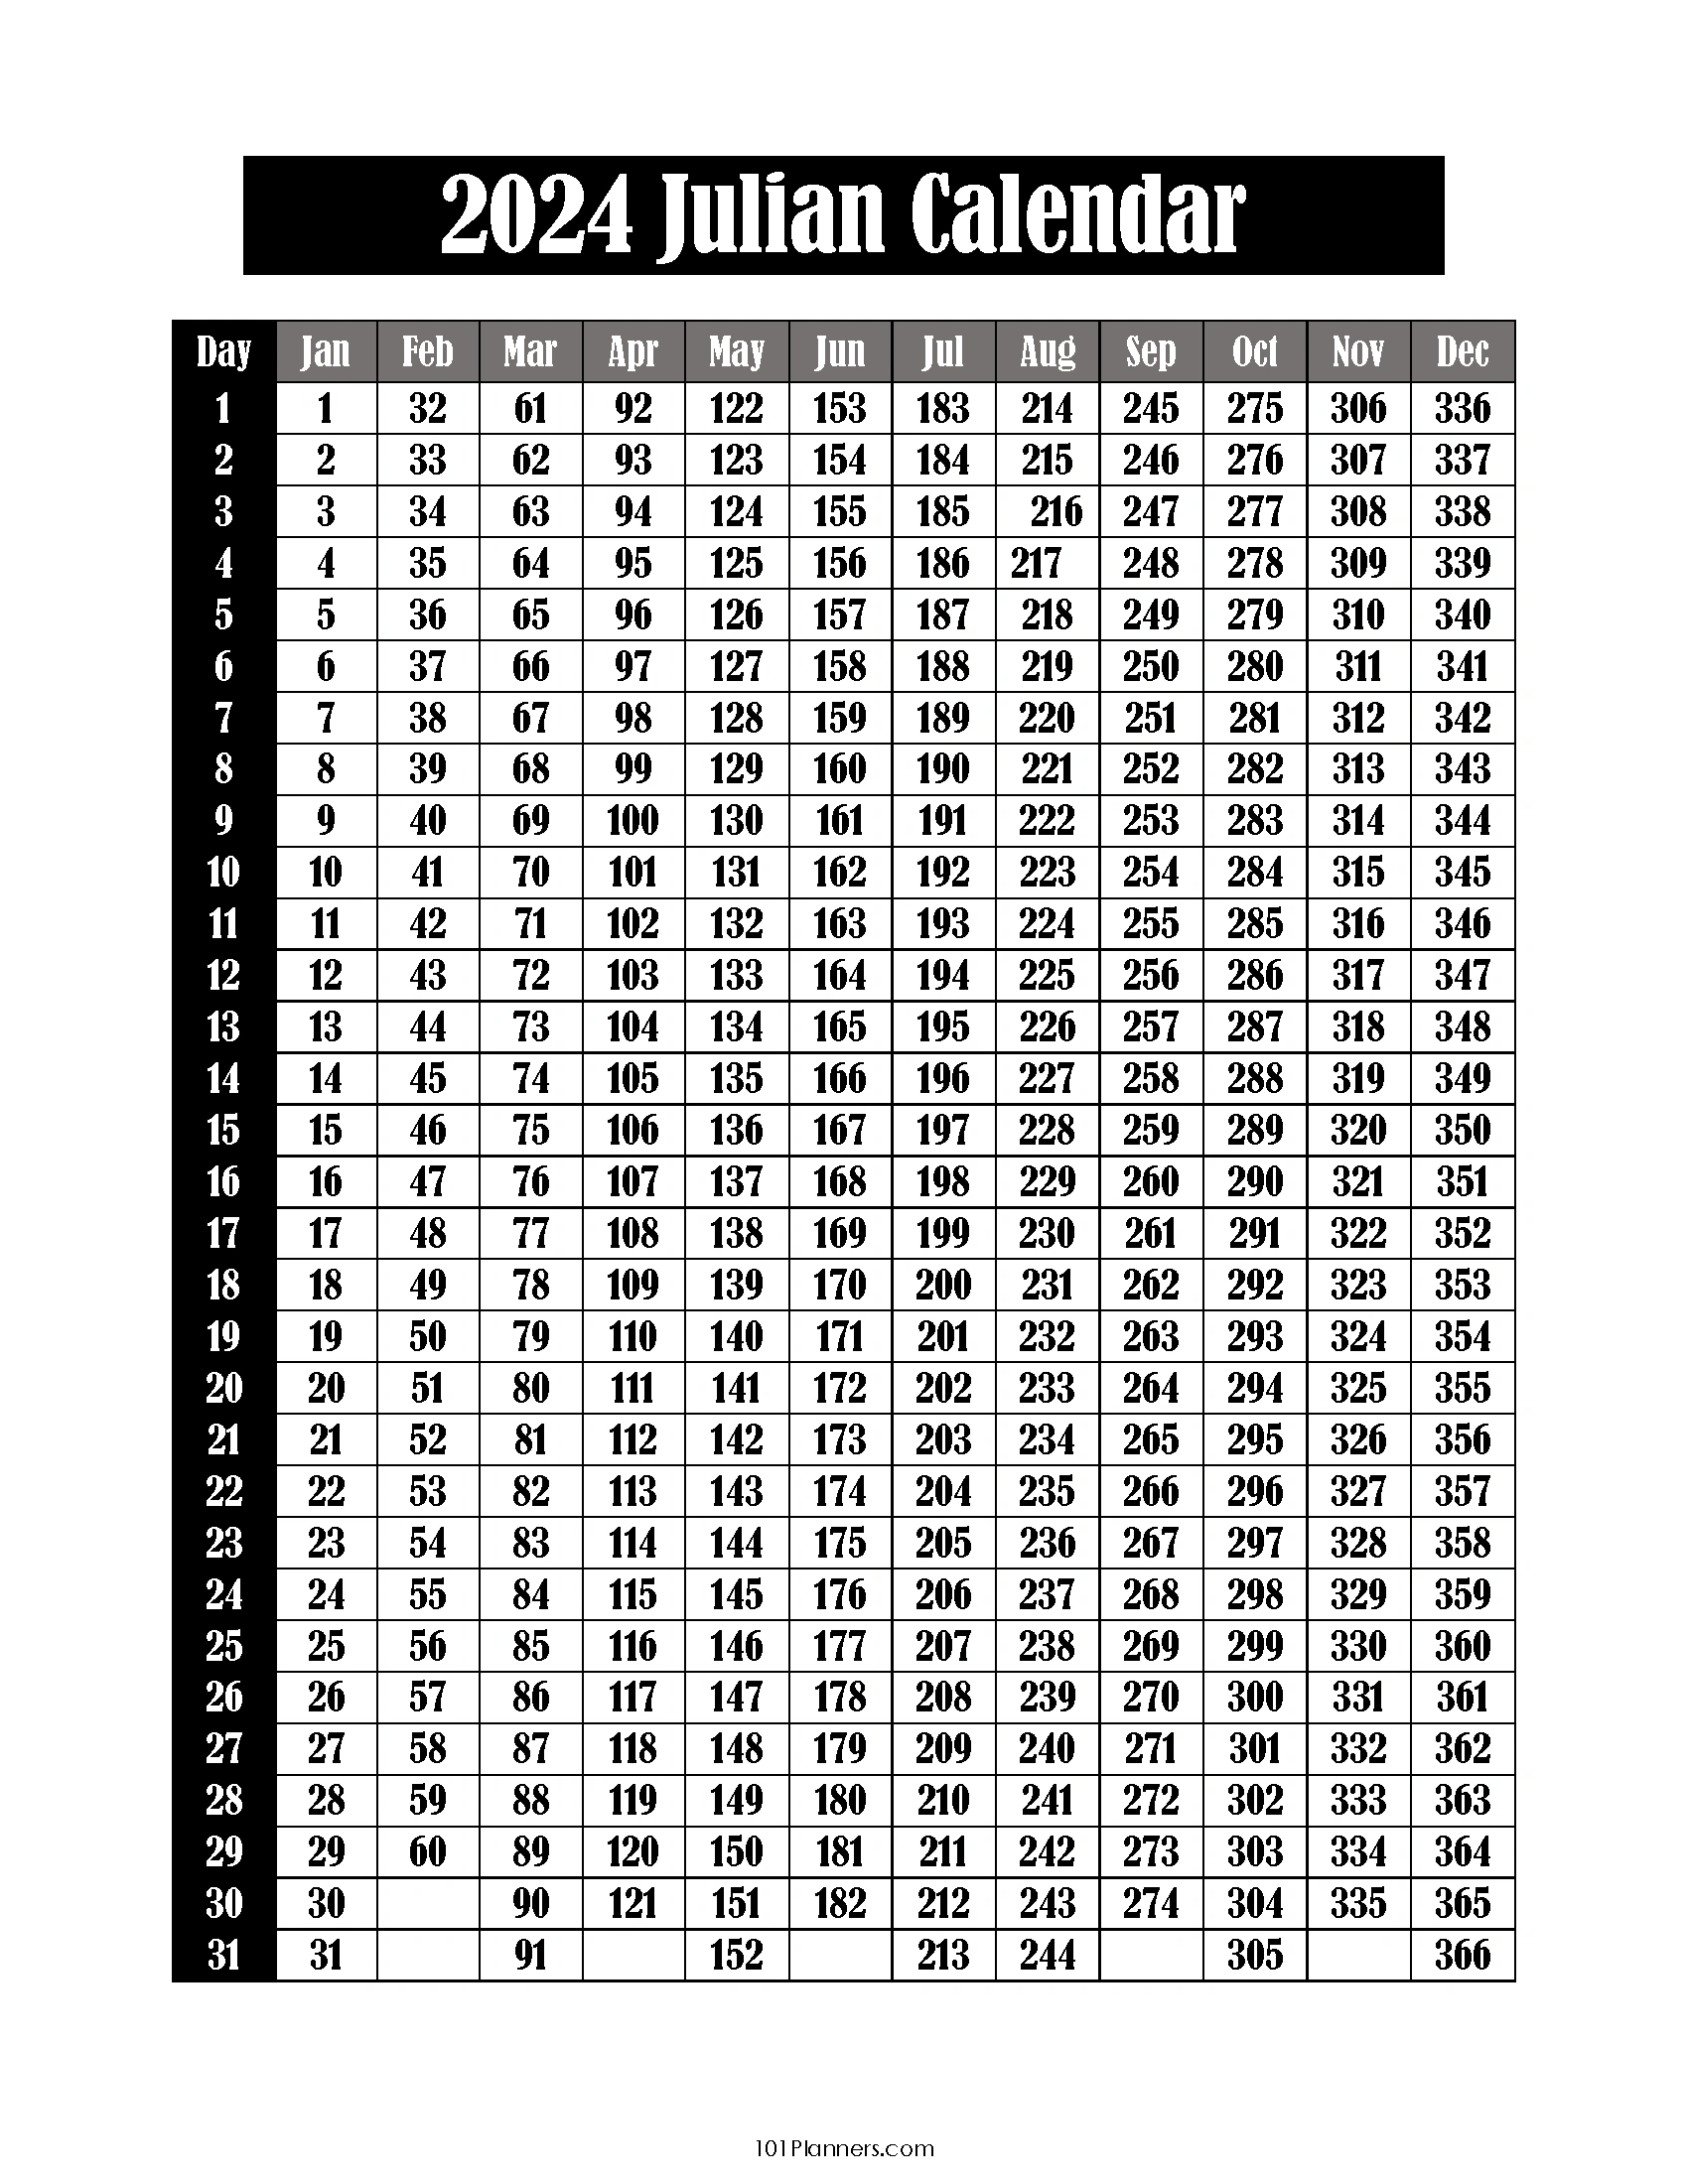 Free Printable Julian Calendar 2024-2032 | Julian Date Today intended for Julian Calendar 2024 Printable